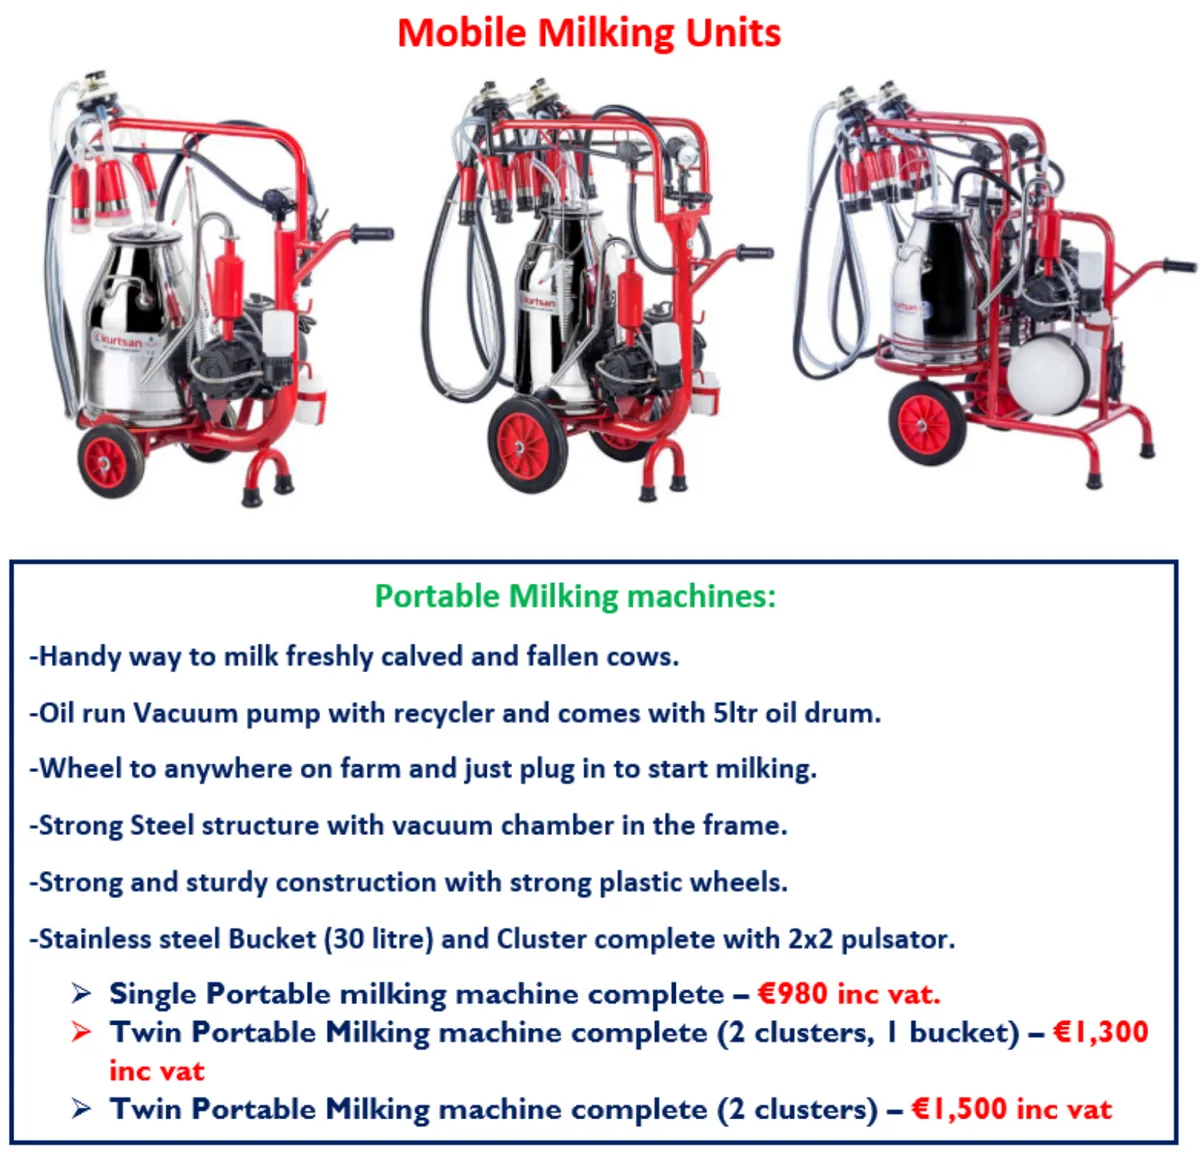 FDS Oil Run portable milking machines